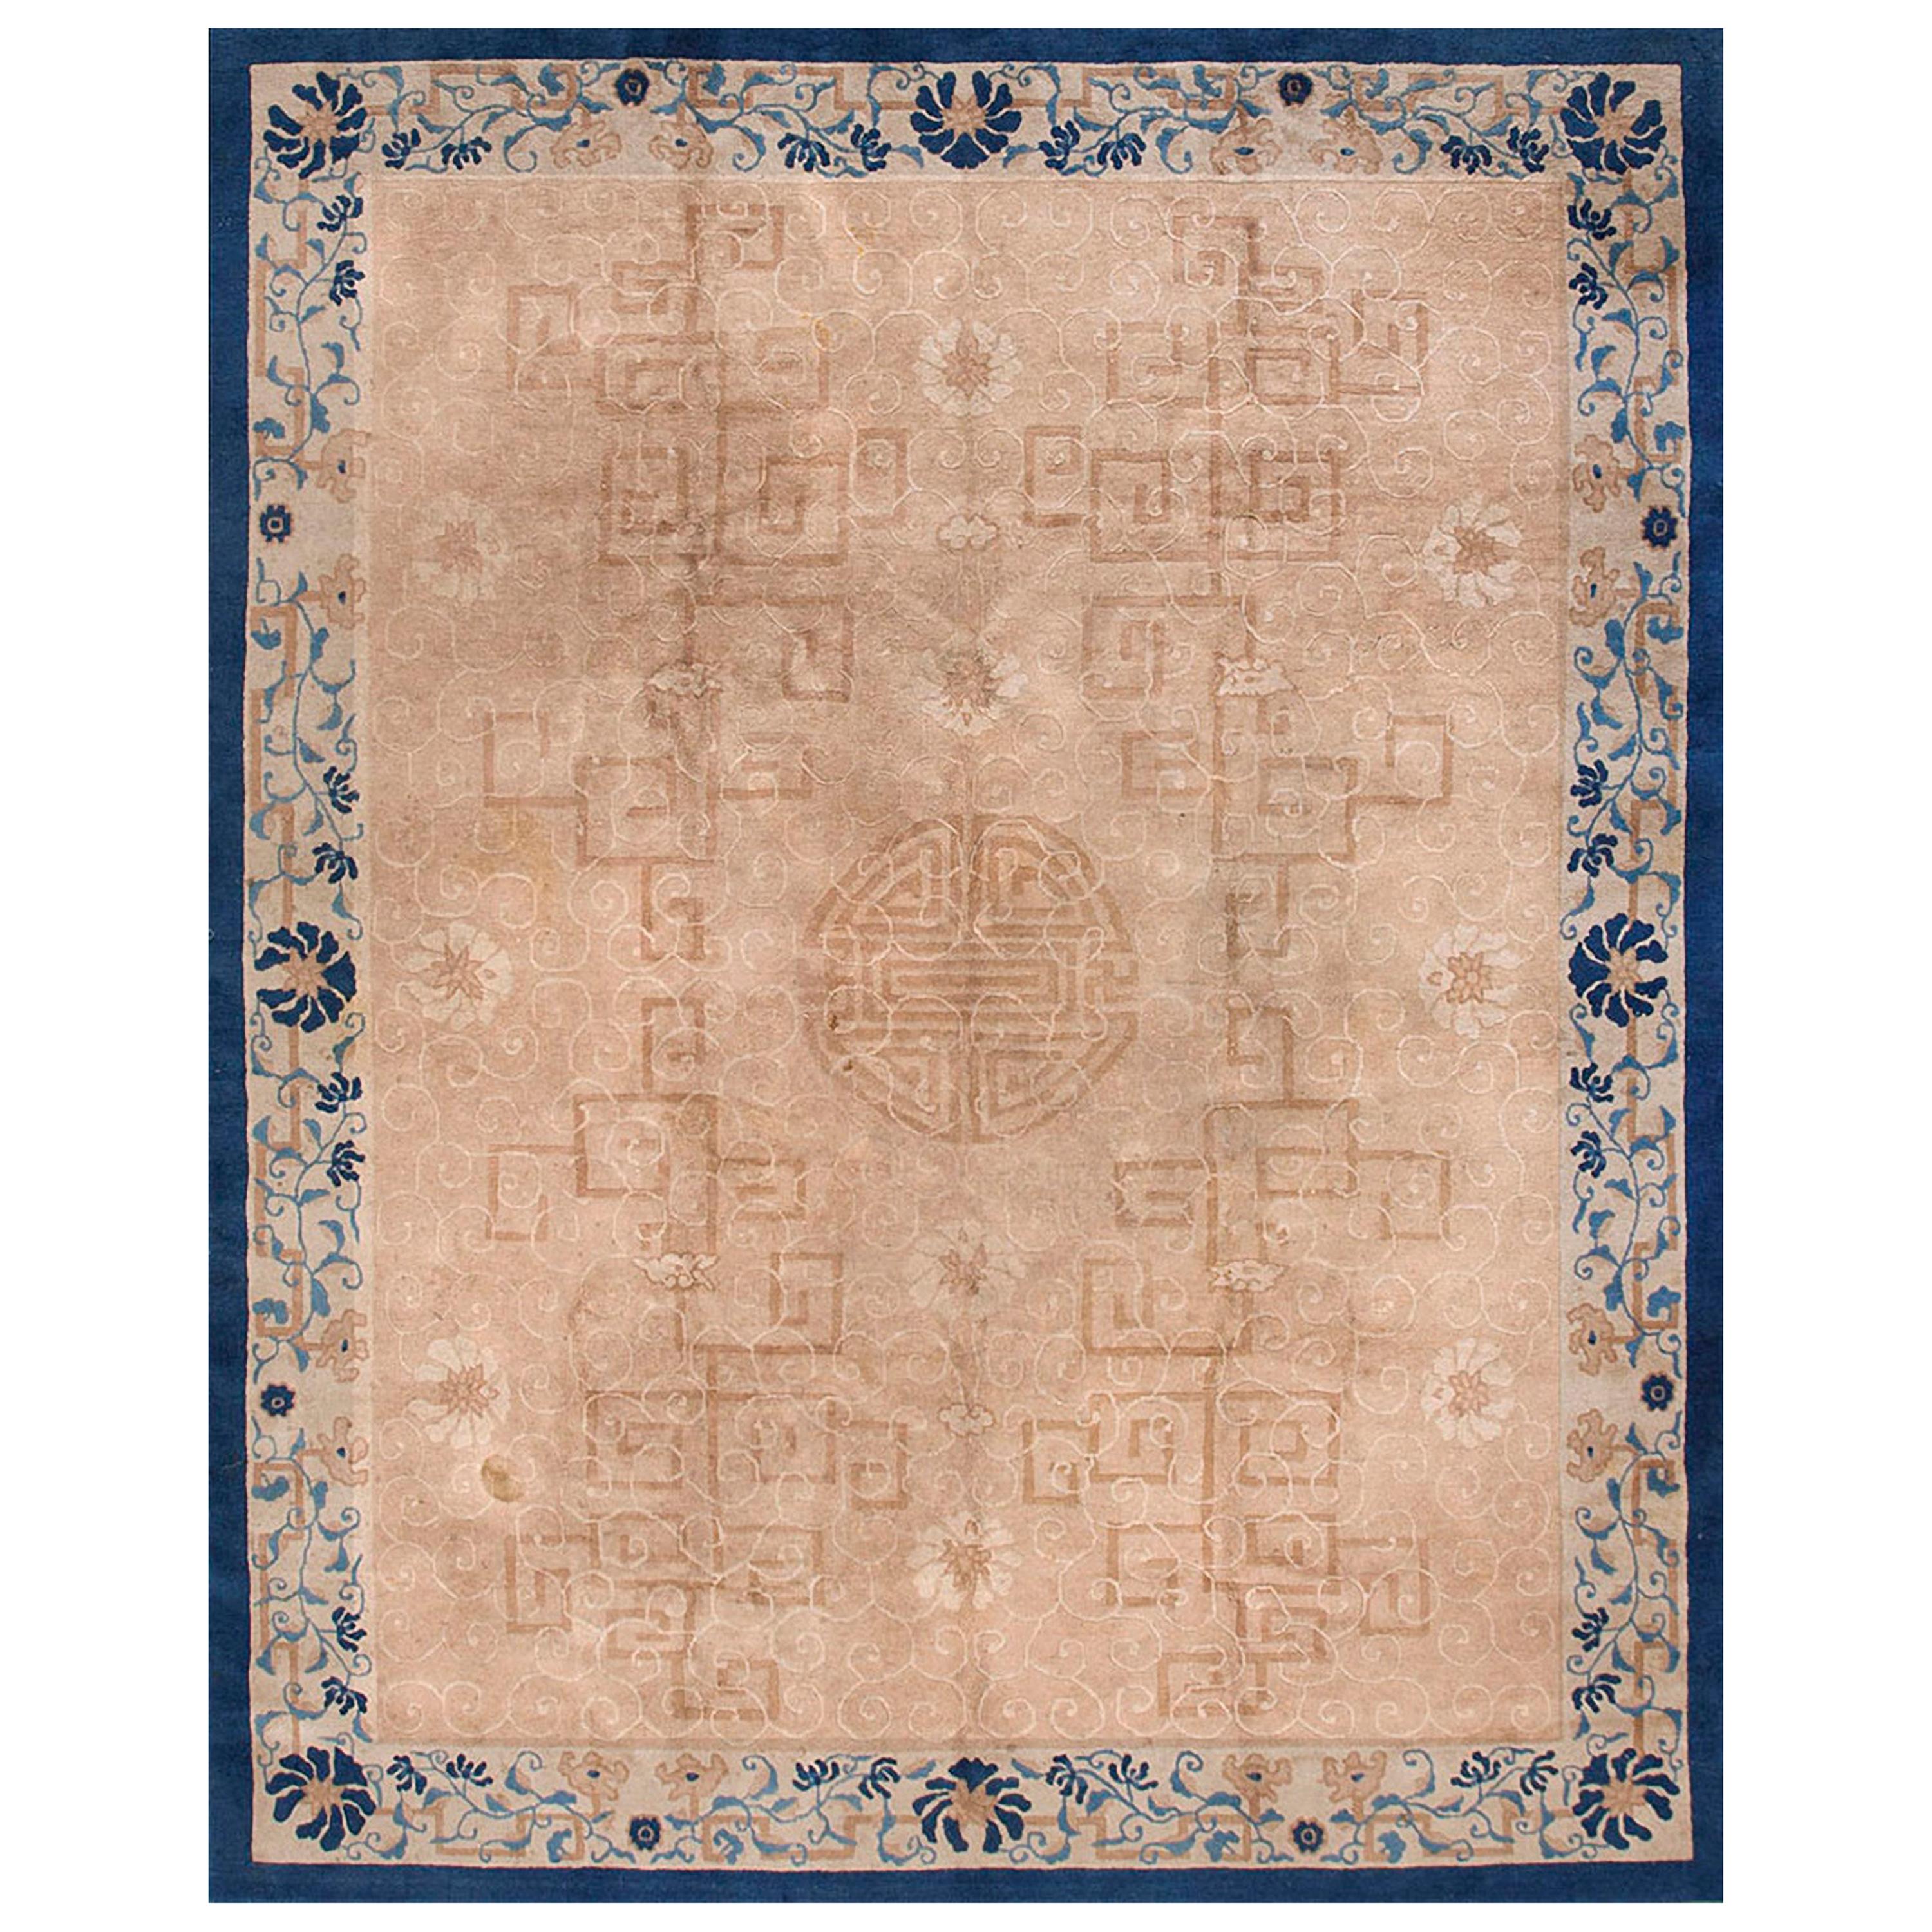 Early 20th Century Chinese Peking Carpet ( 8' 2" x 10' - 250 x 305 cm )